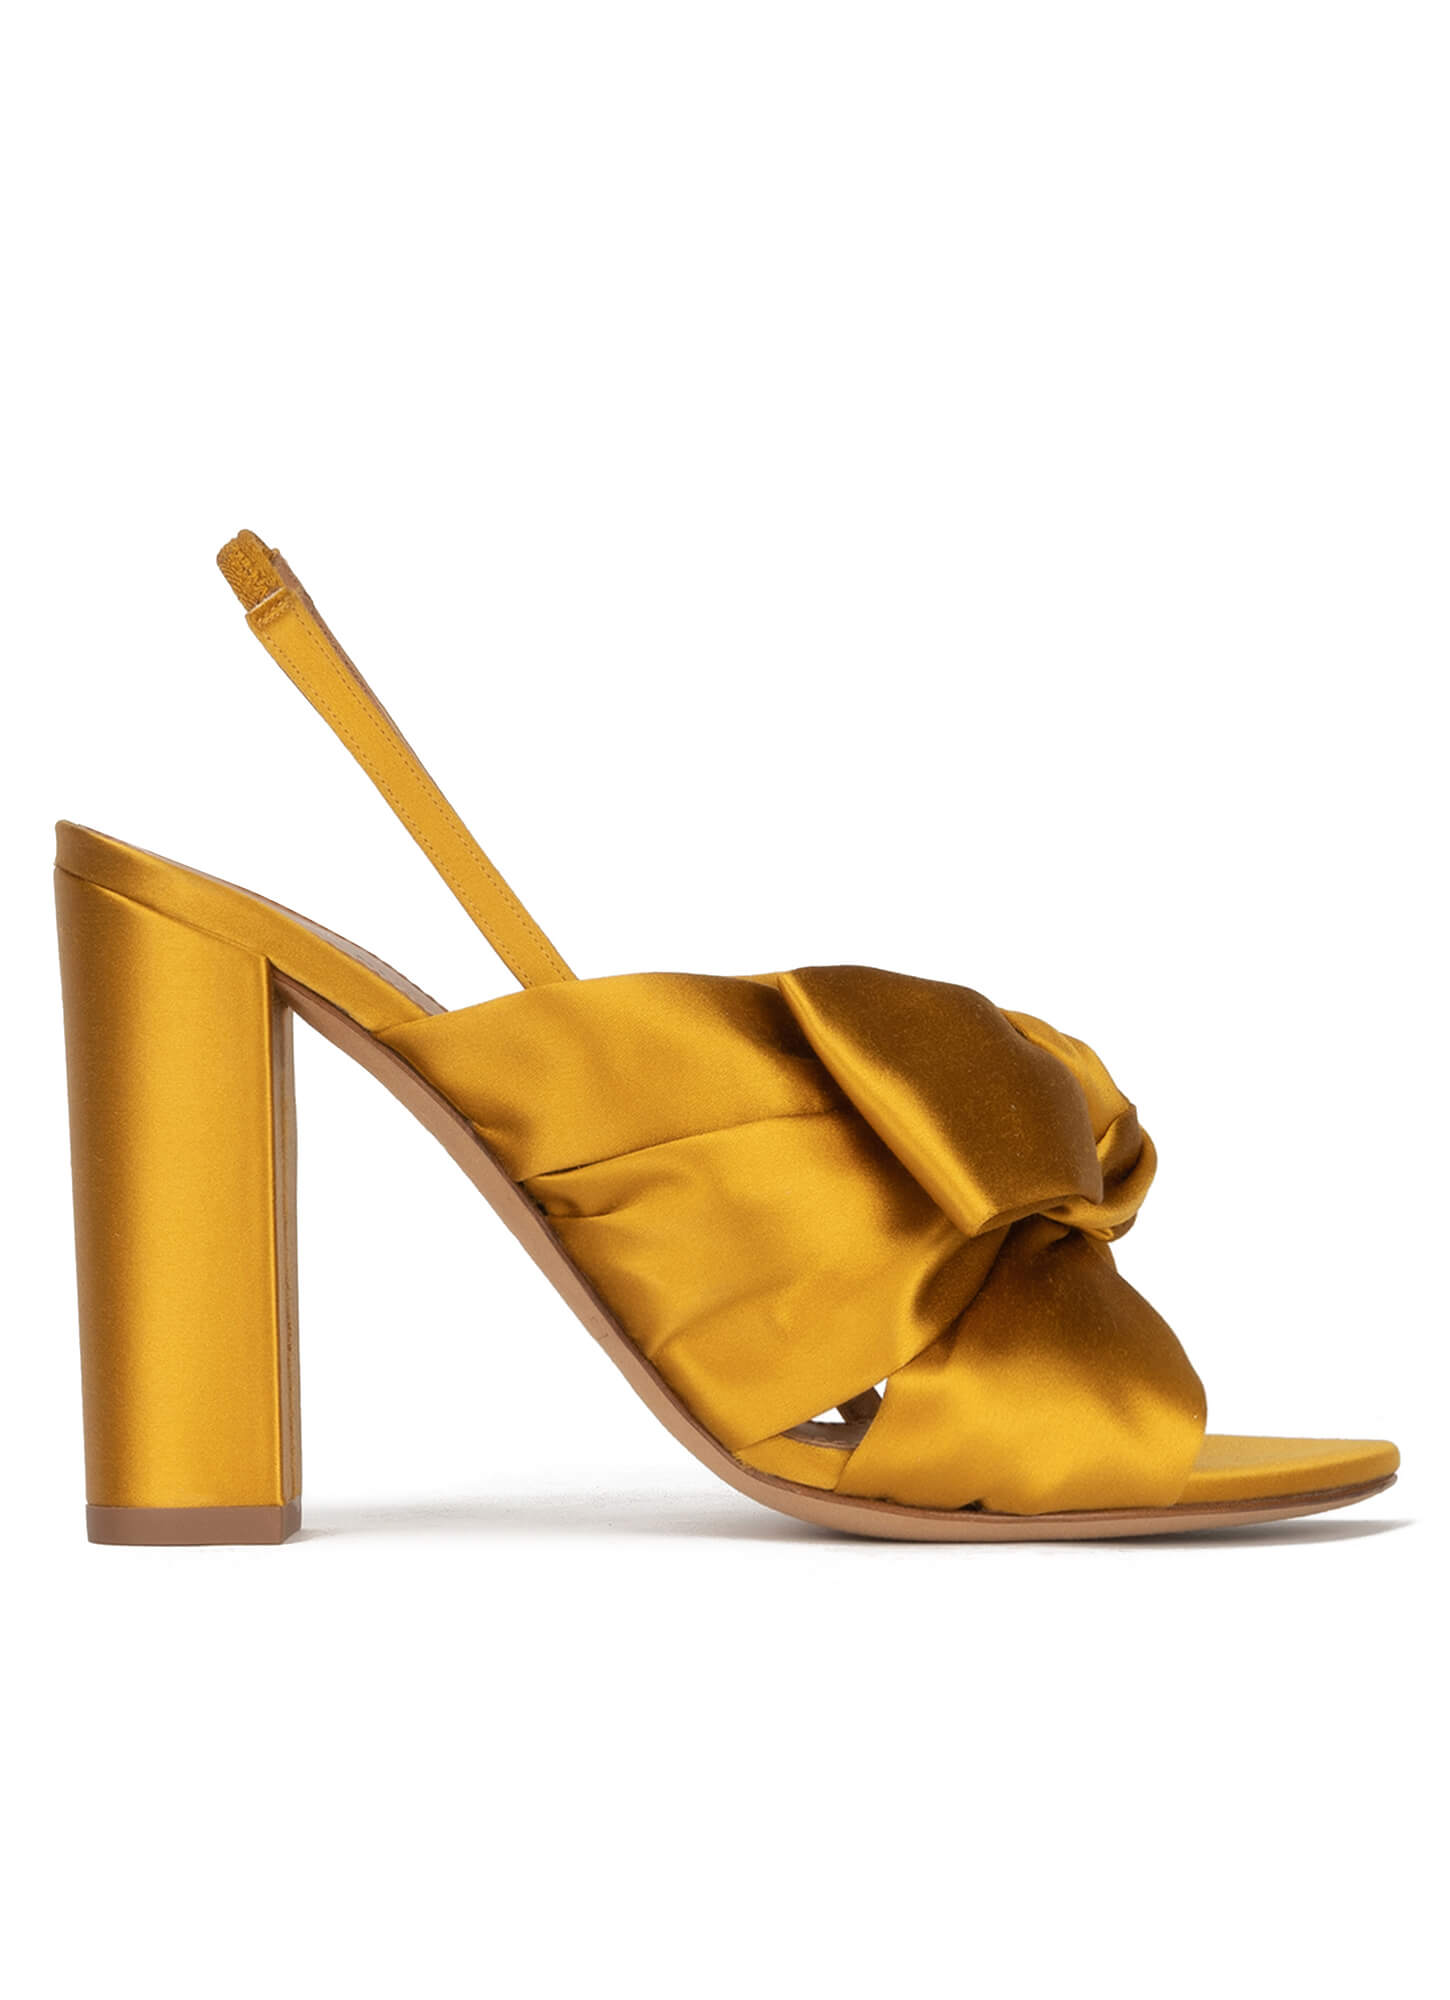 mustard yellow satin heels